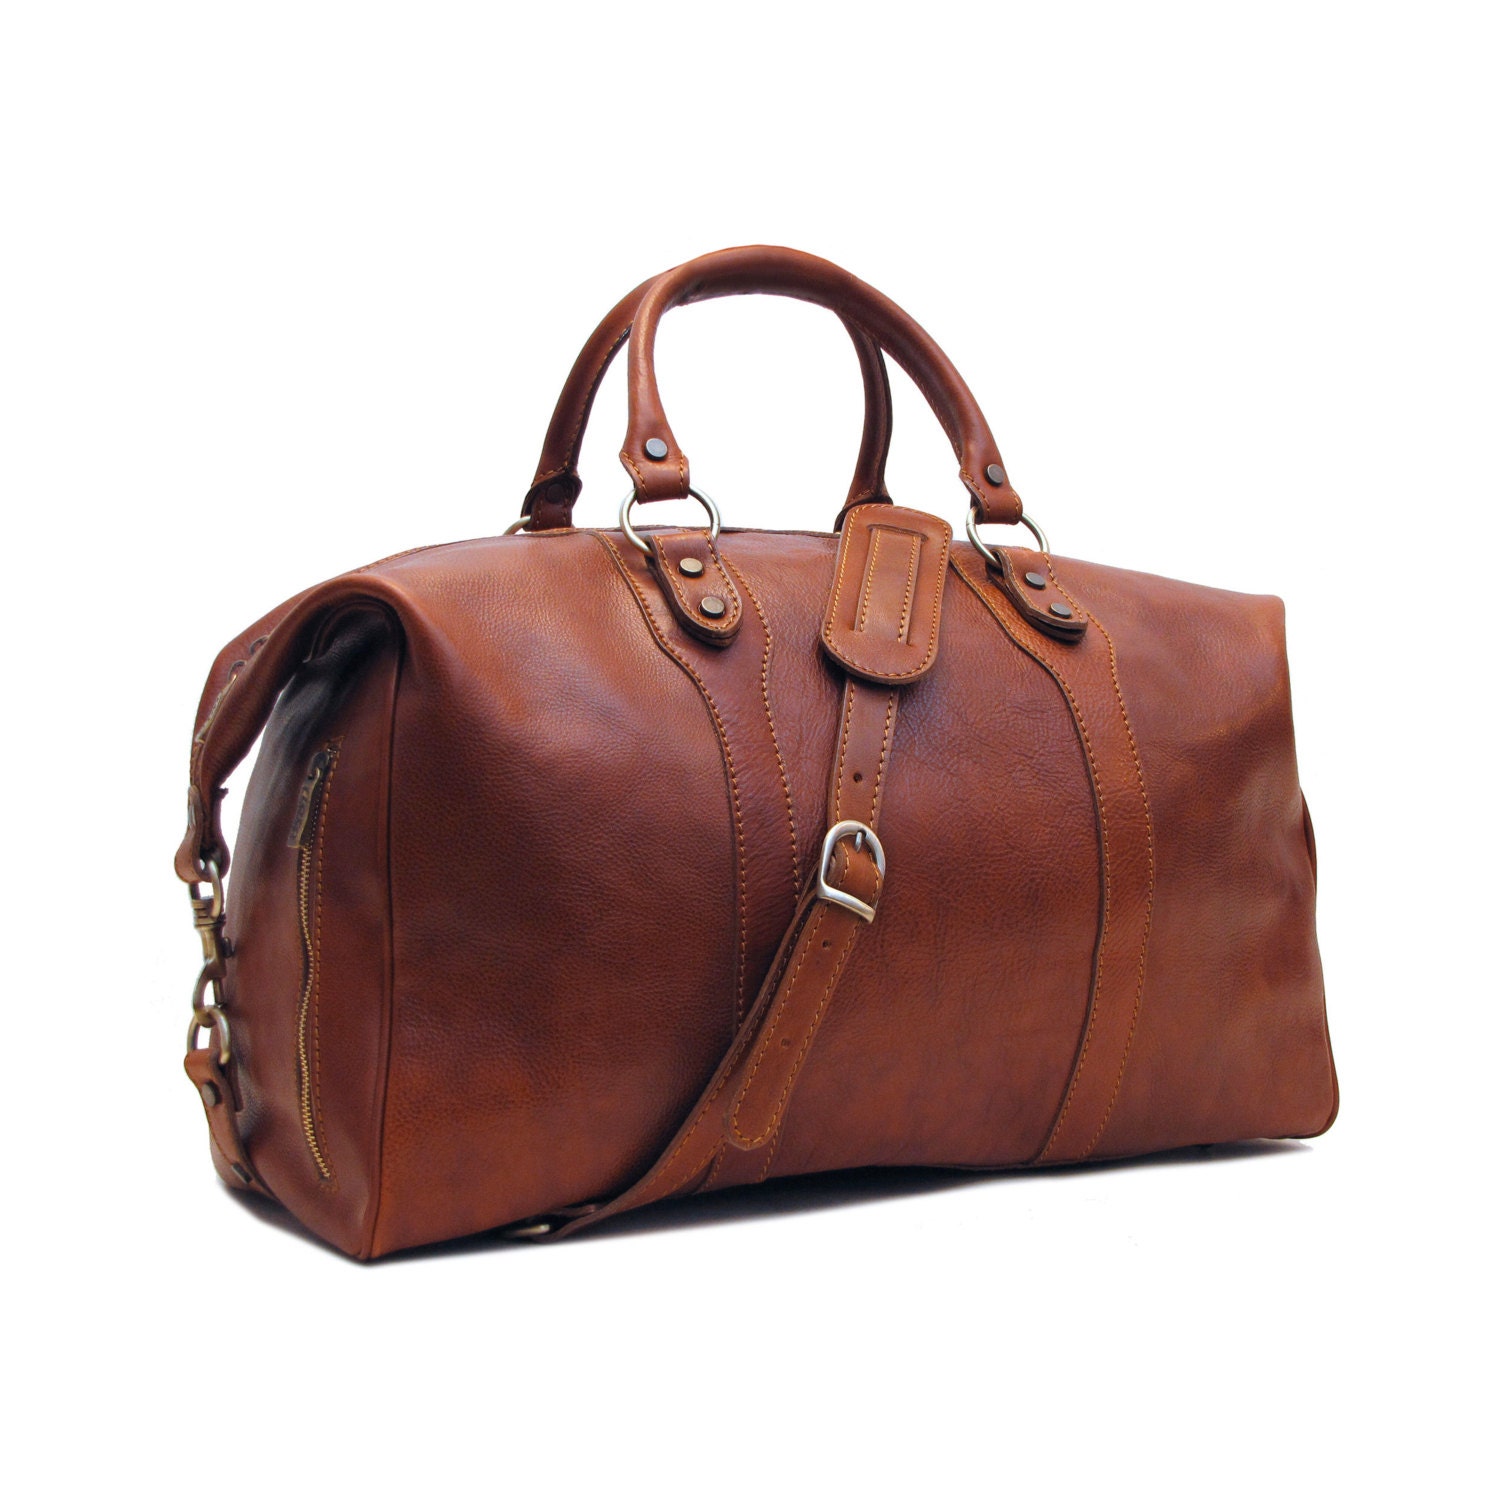 Leather Duffle Bag 21 / Floto 4046 Roma / Travel Bag / | Etsy